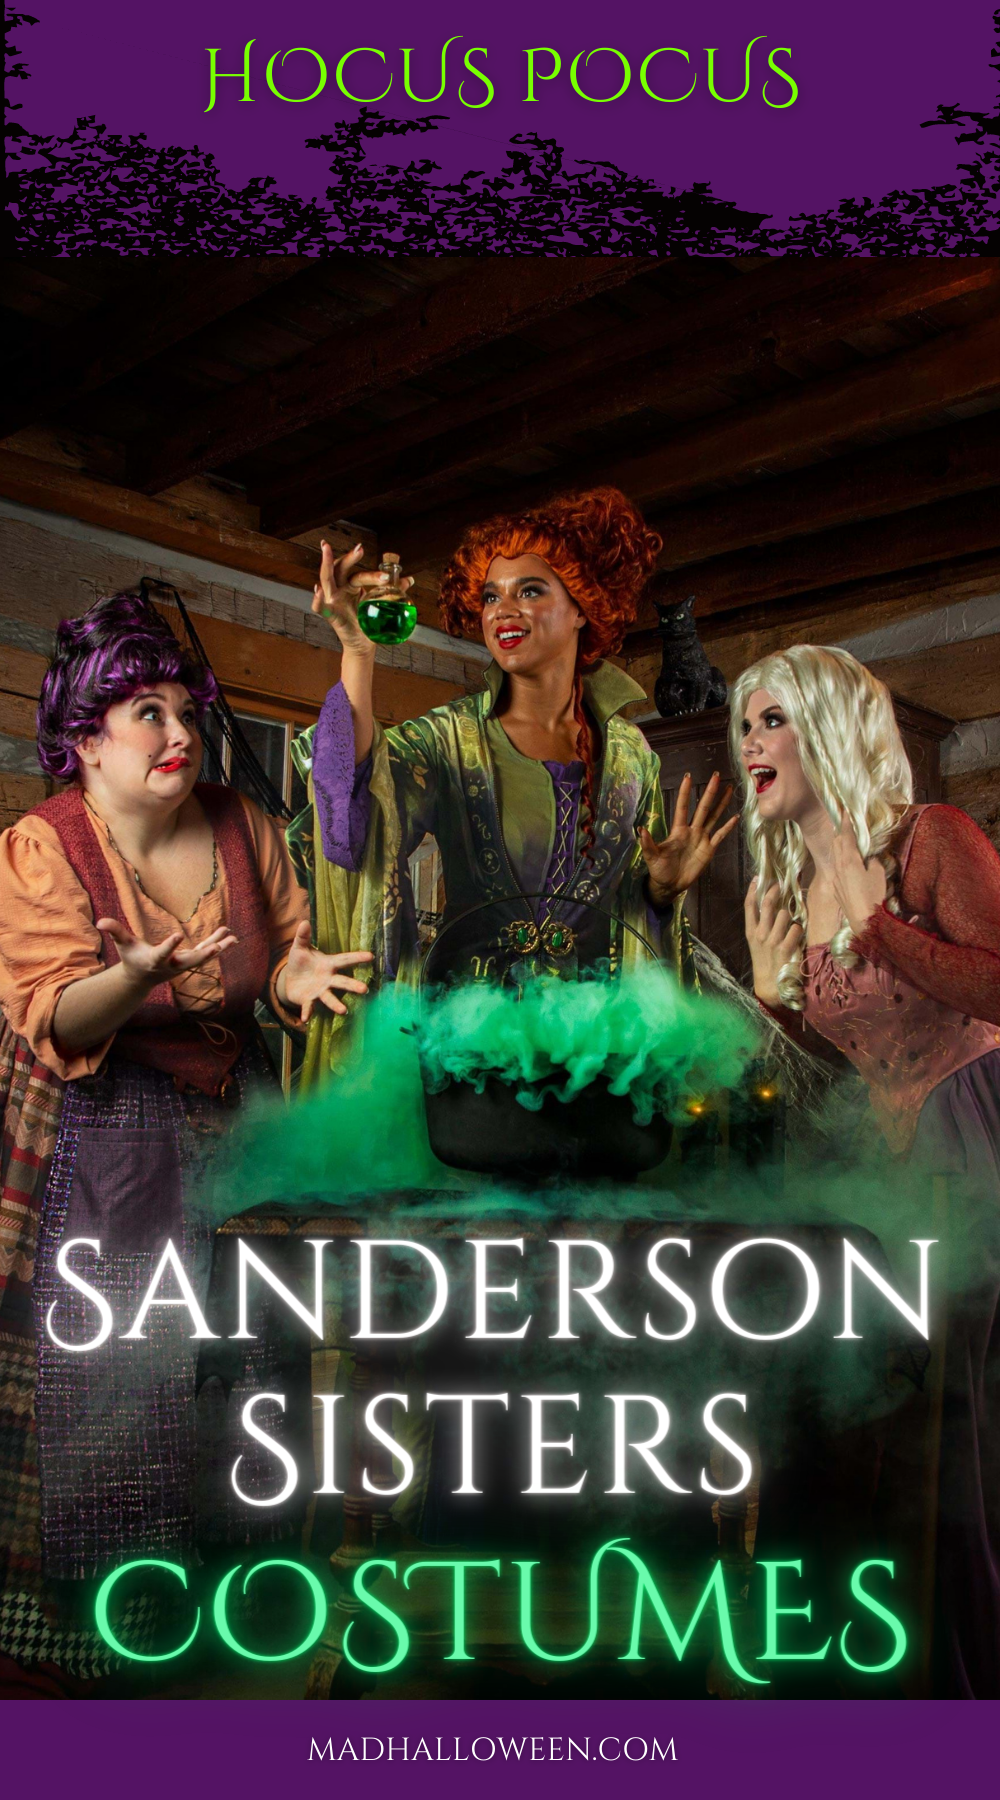 Sanderson Sisters Costumes For Halloween - Hocus Pocus - Mad Halloween